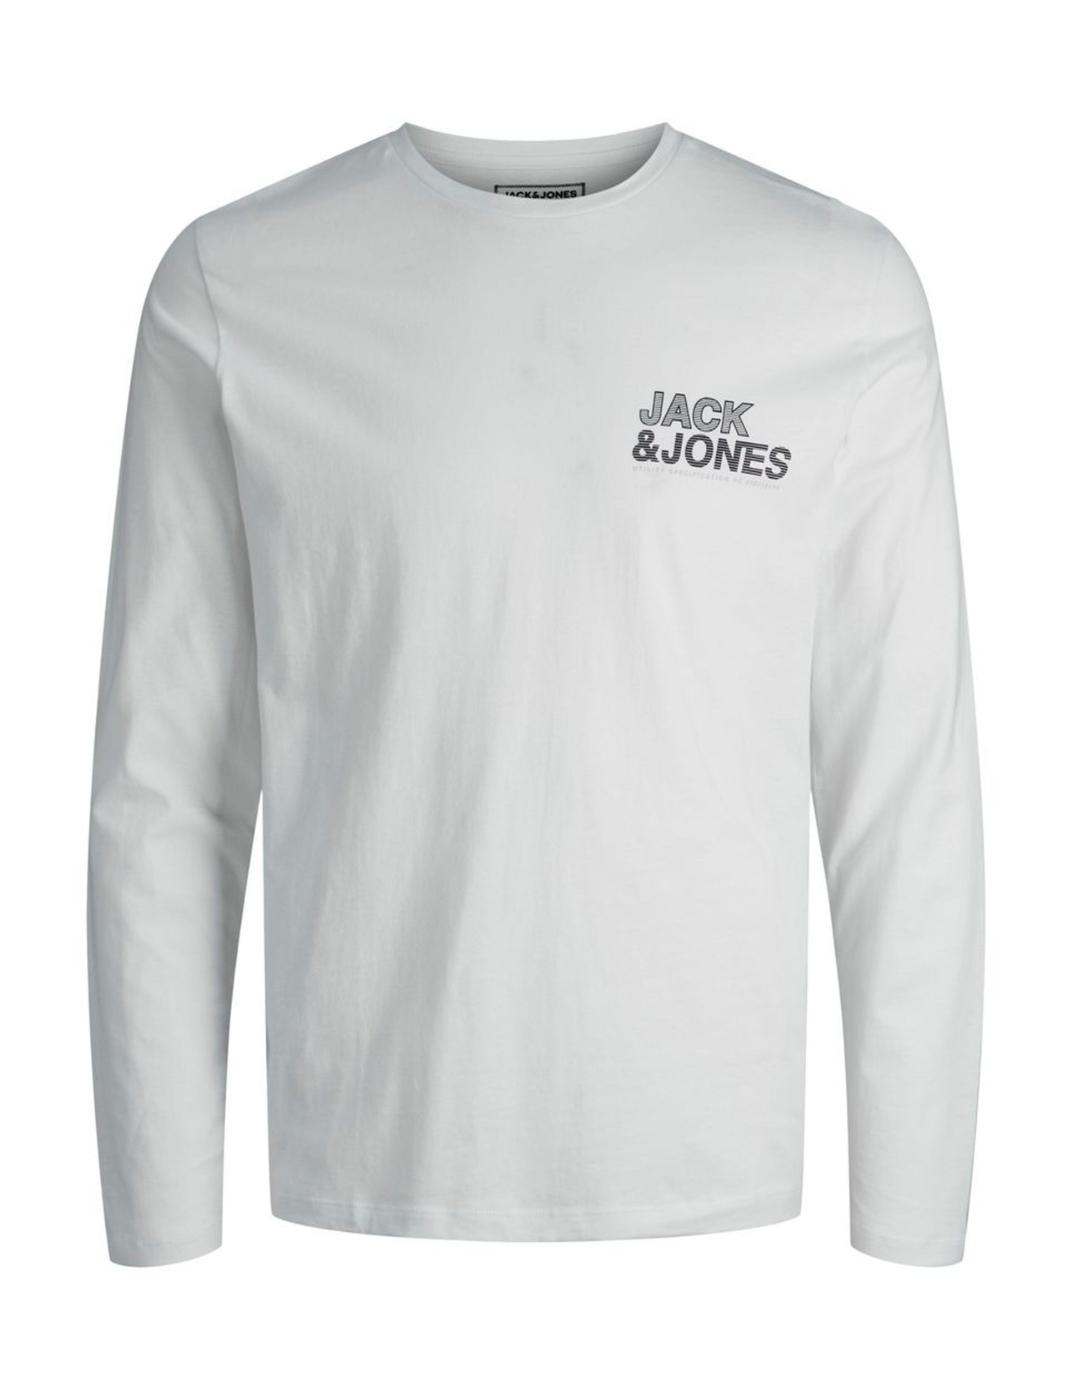 Camiseta Jack-Jones manga larga blanca de hombre-z